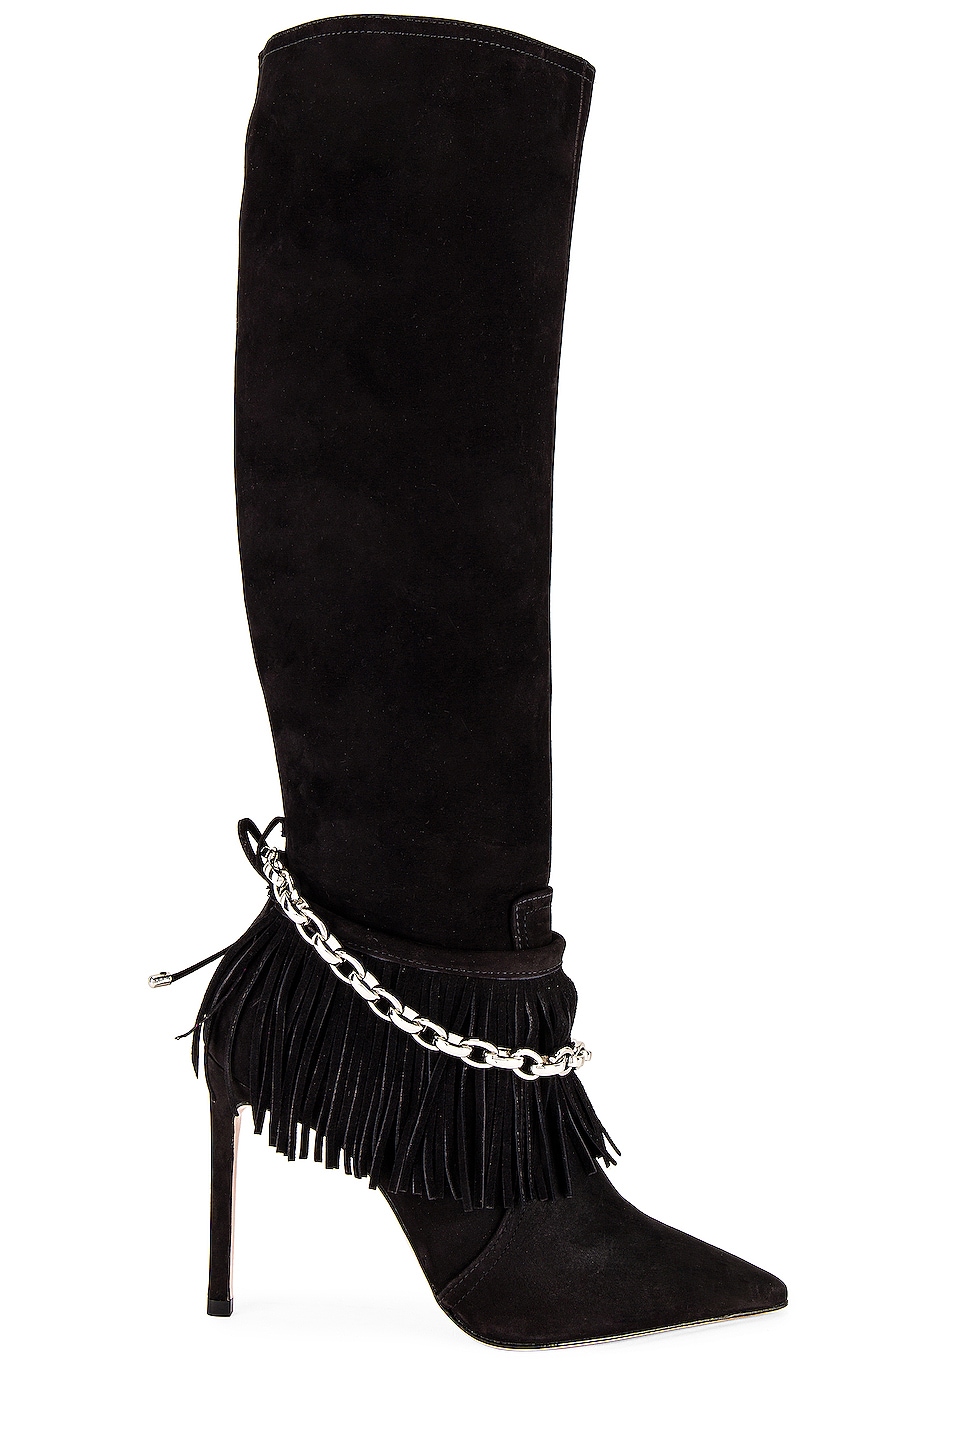 Schutz Women's Schutz S Helga Tall Boots Lux Strech Black MSRP $325